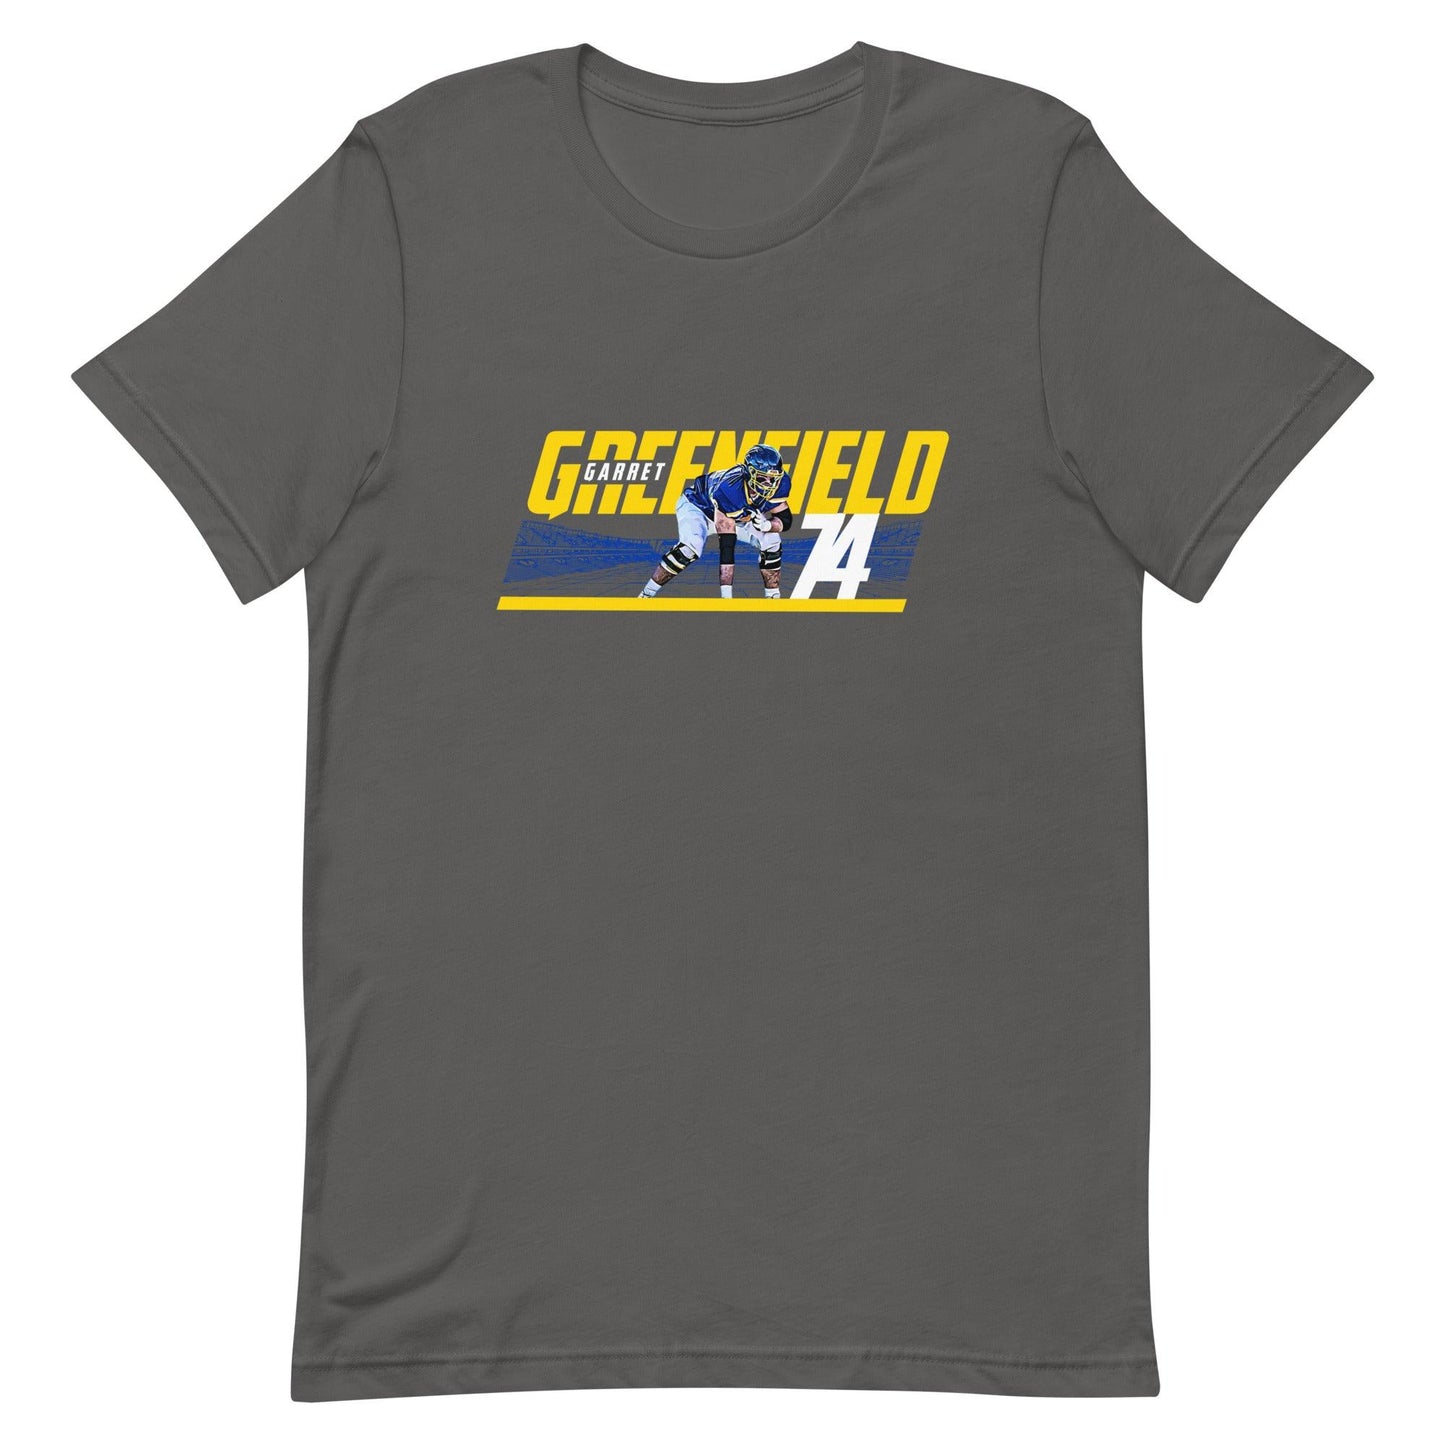 Garret Greenfield "Gameday" t-shirt - Fan Arch